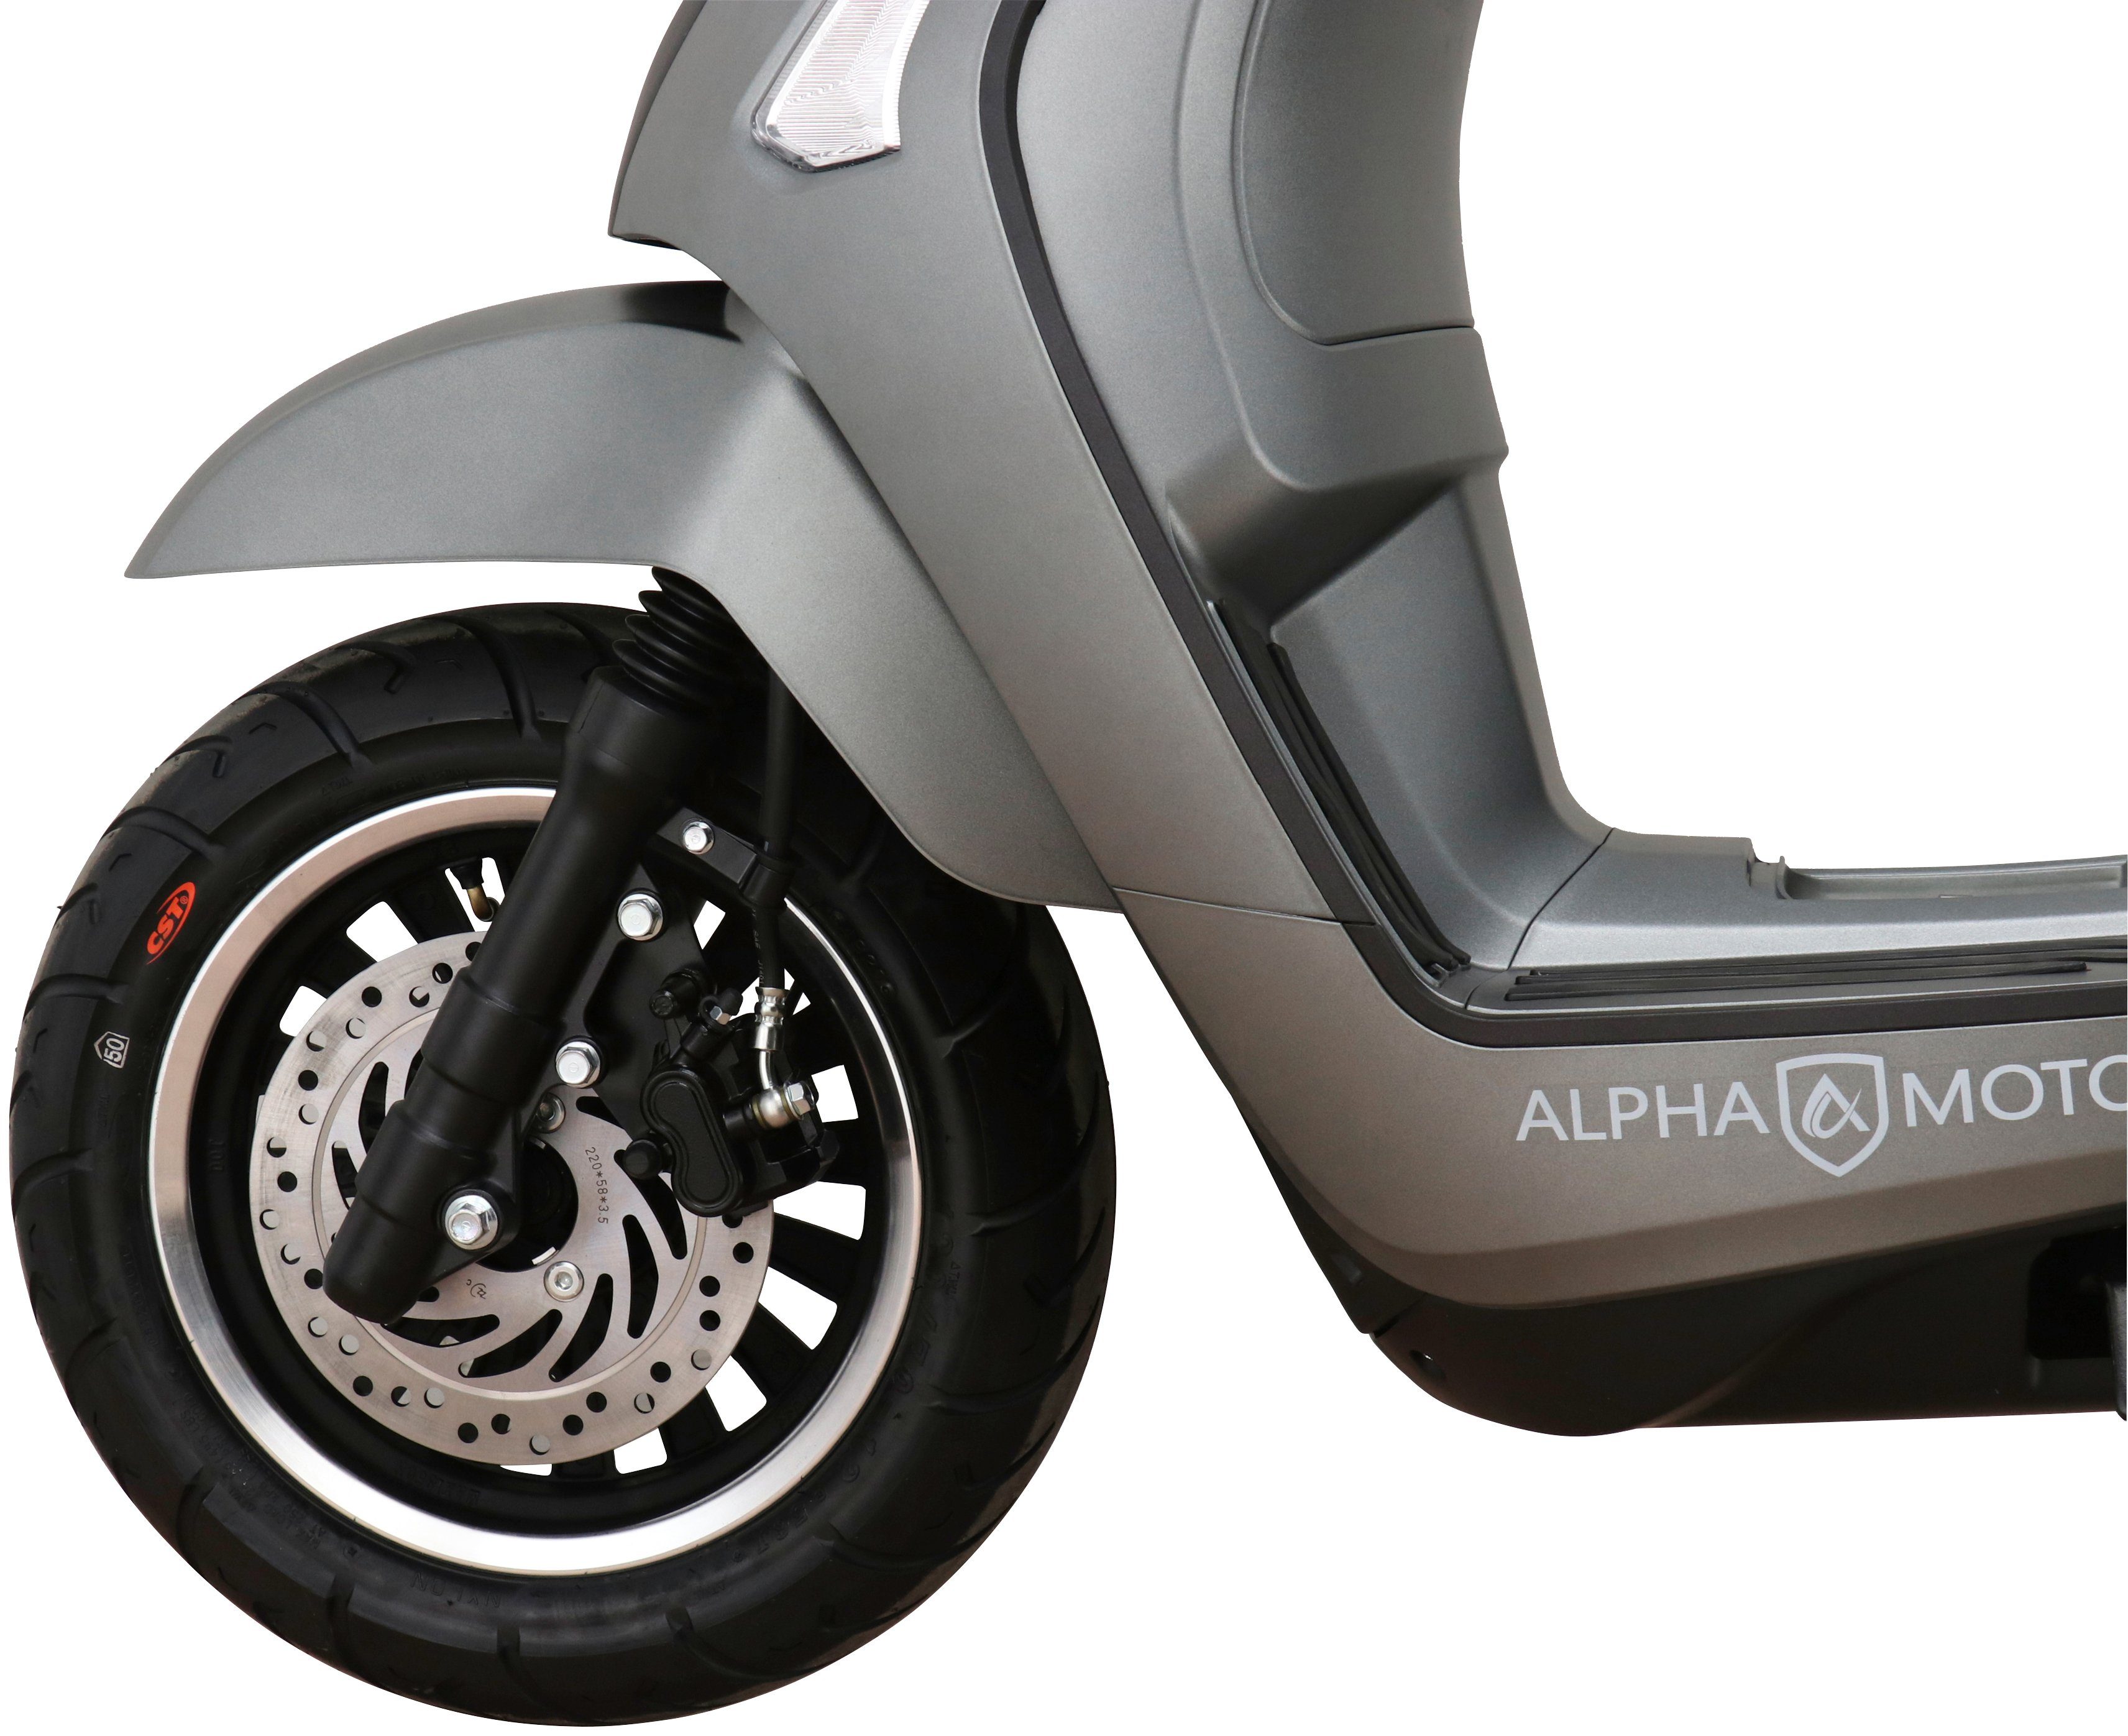 Alpha Motors Motorroller ccm, Vita, 5 125 km/h, Euro 85